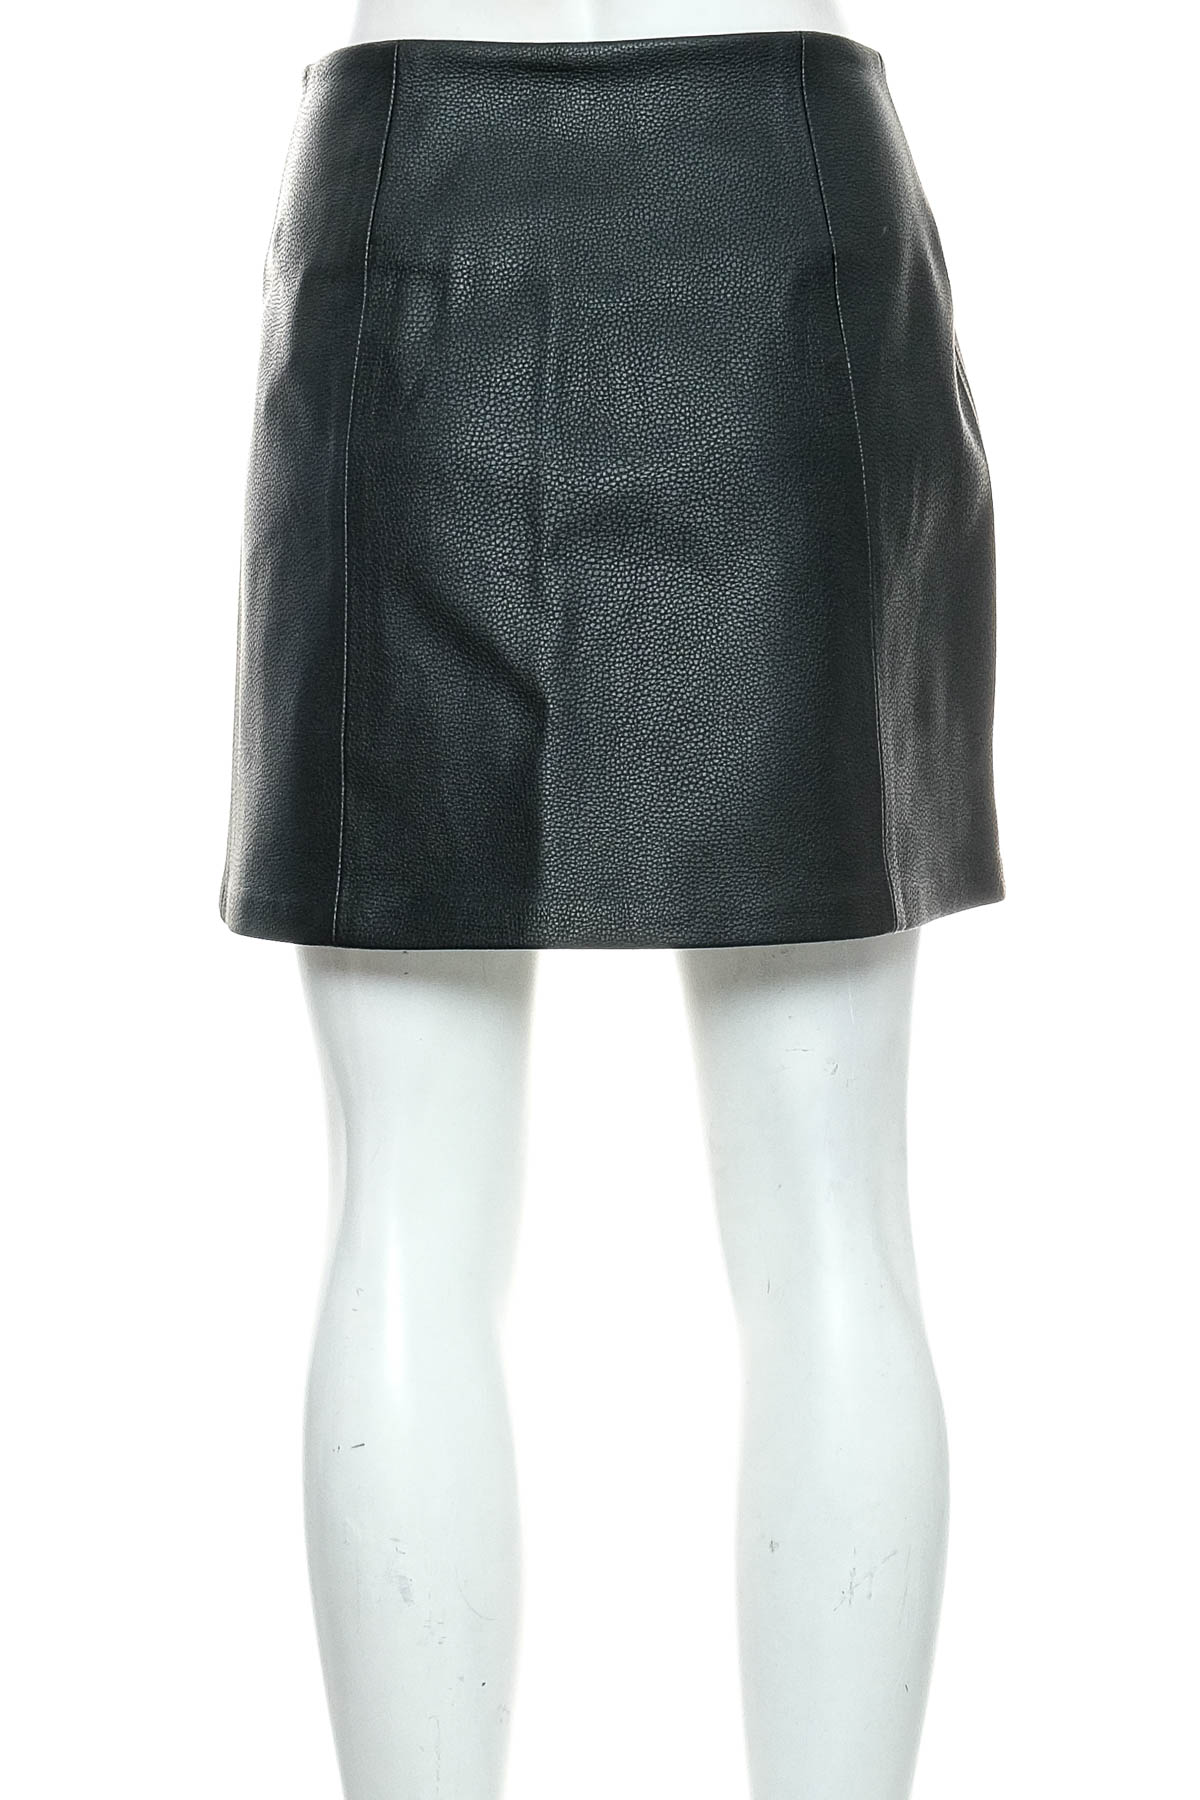 Leather skirt - Bershka - 1